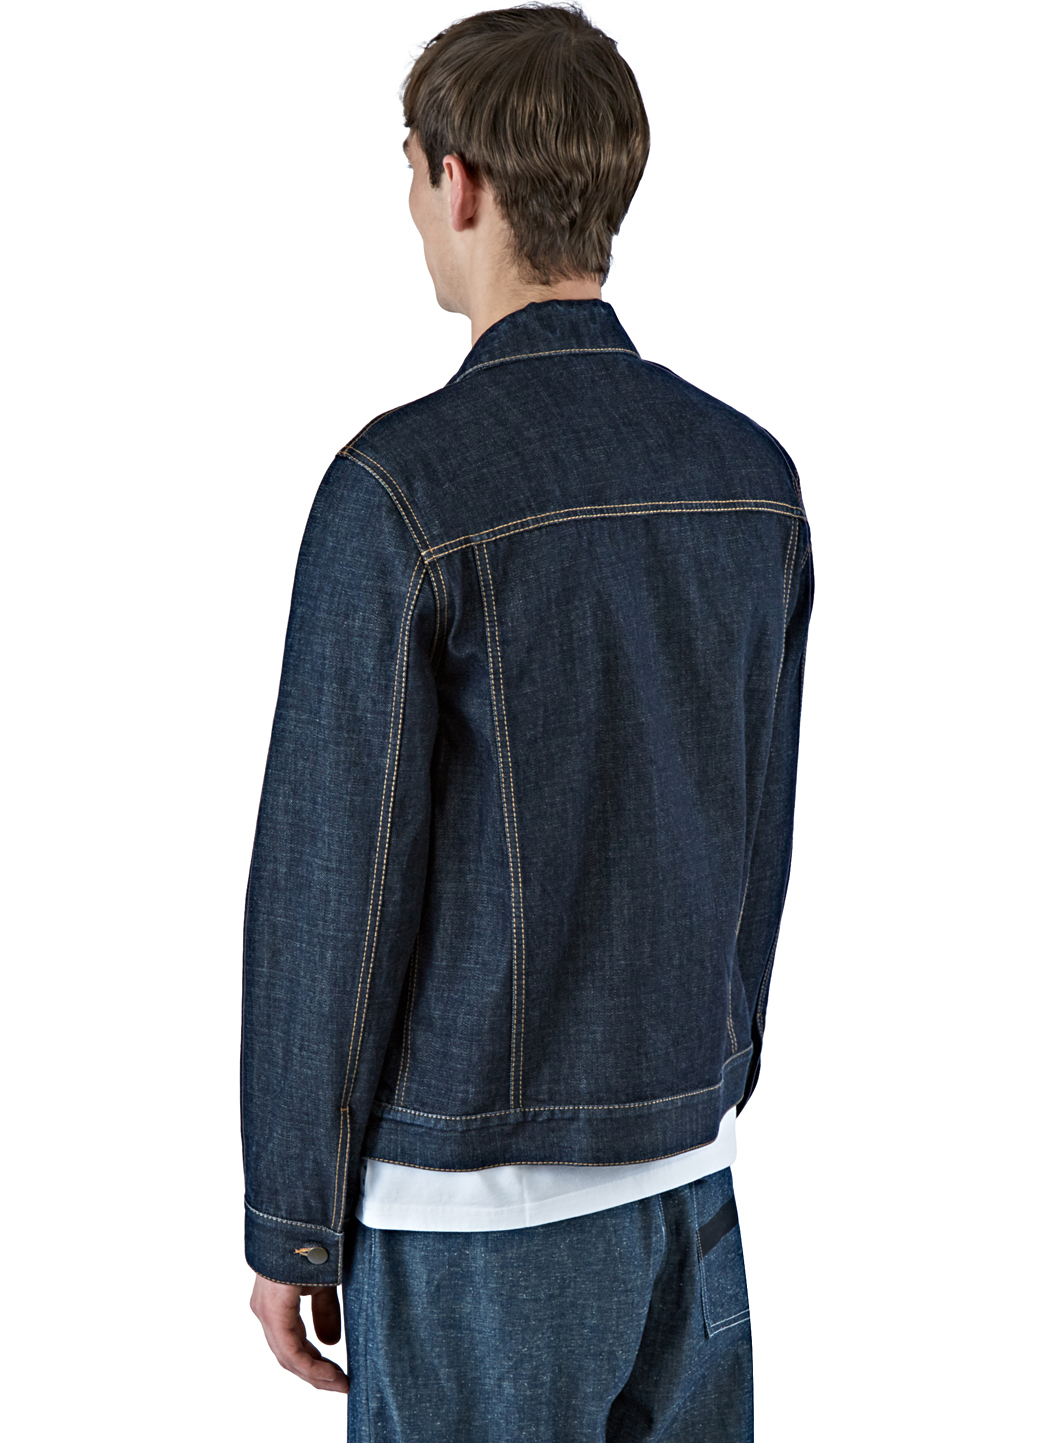 Marni Men's Raw Denim Jacket In Indigo in Blue for Men - Lyst